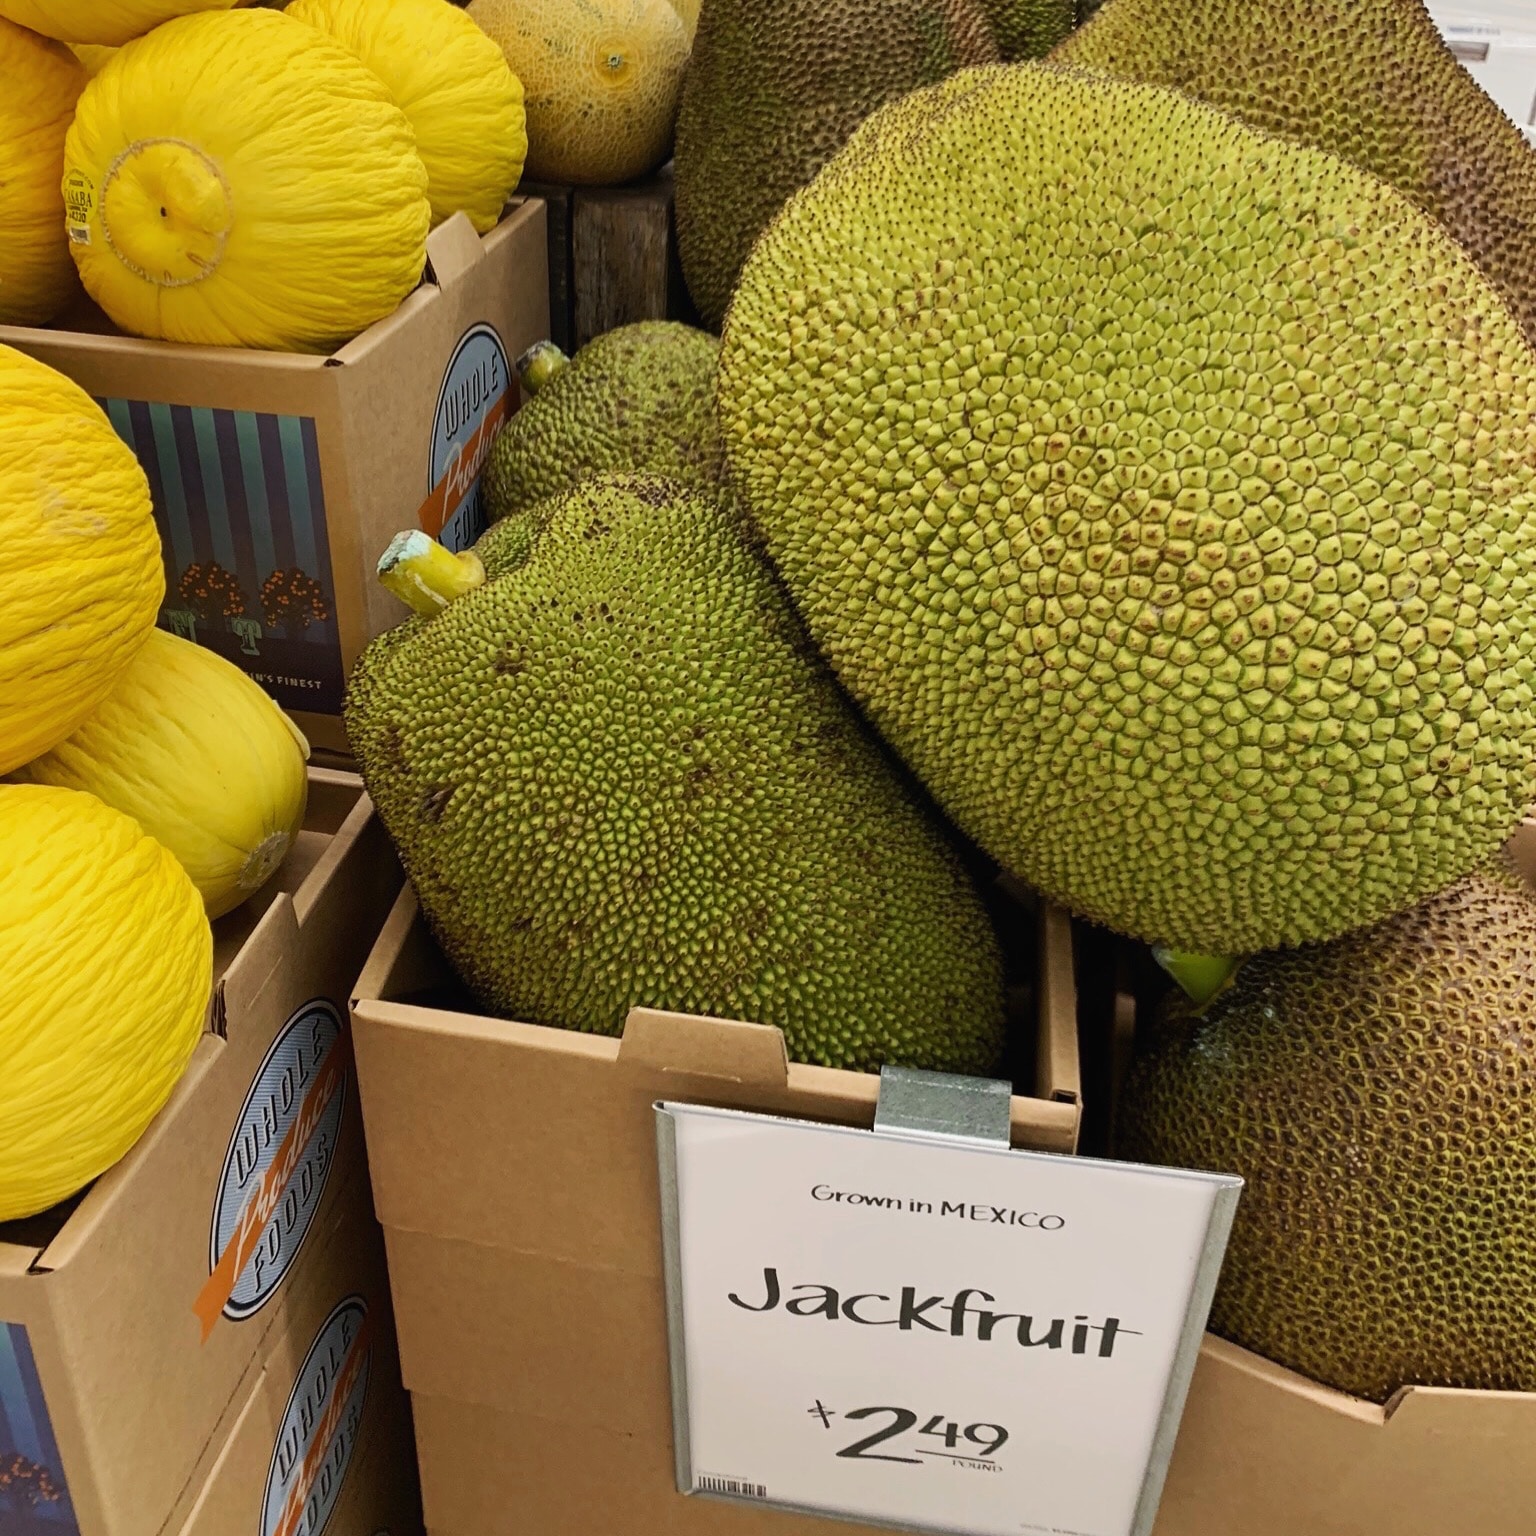 whole foods jackfruit